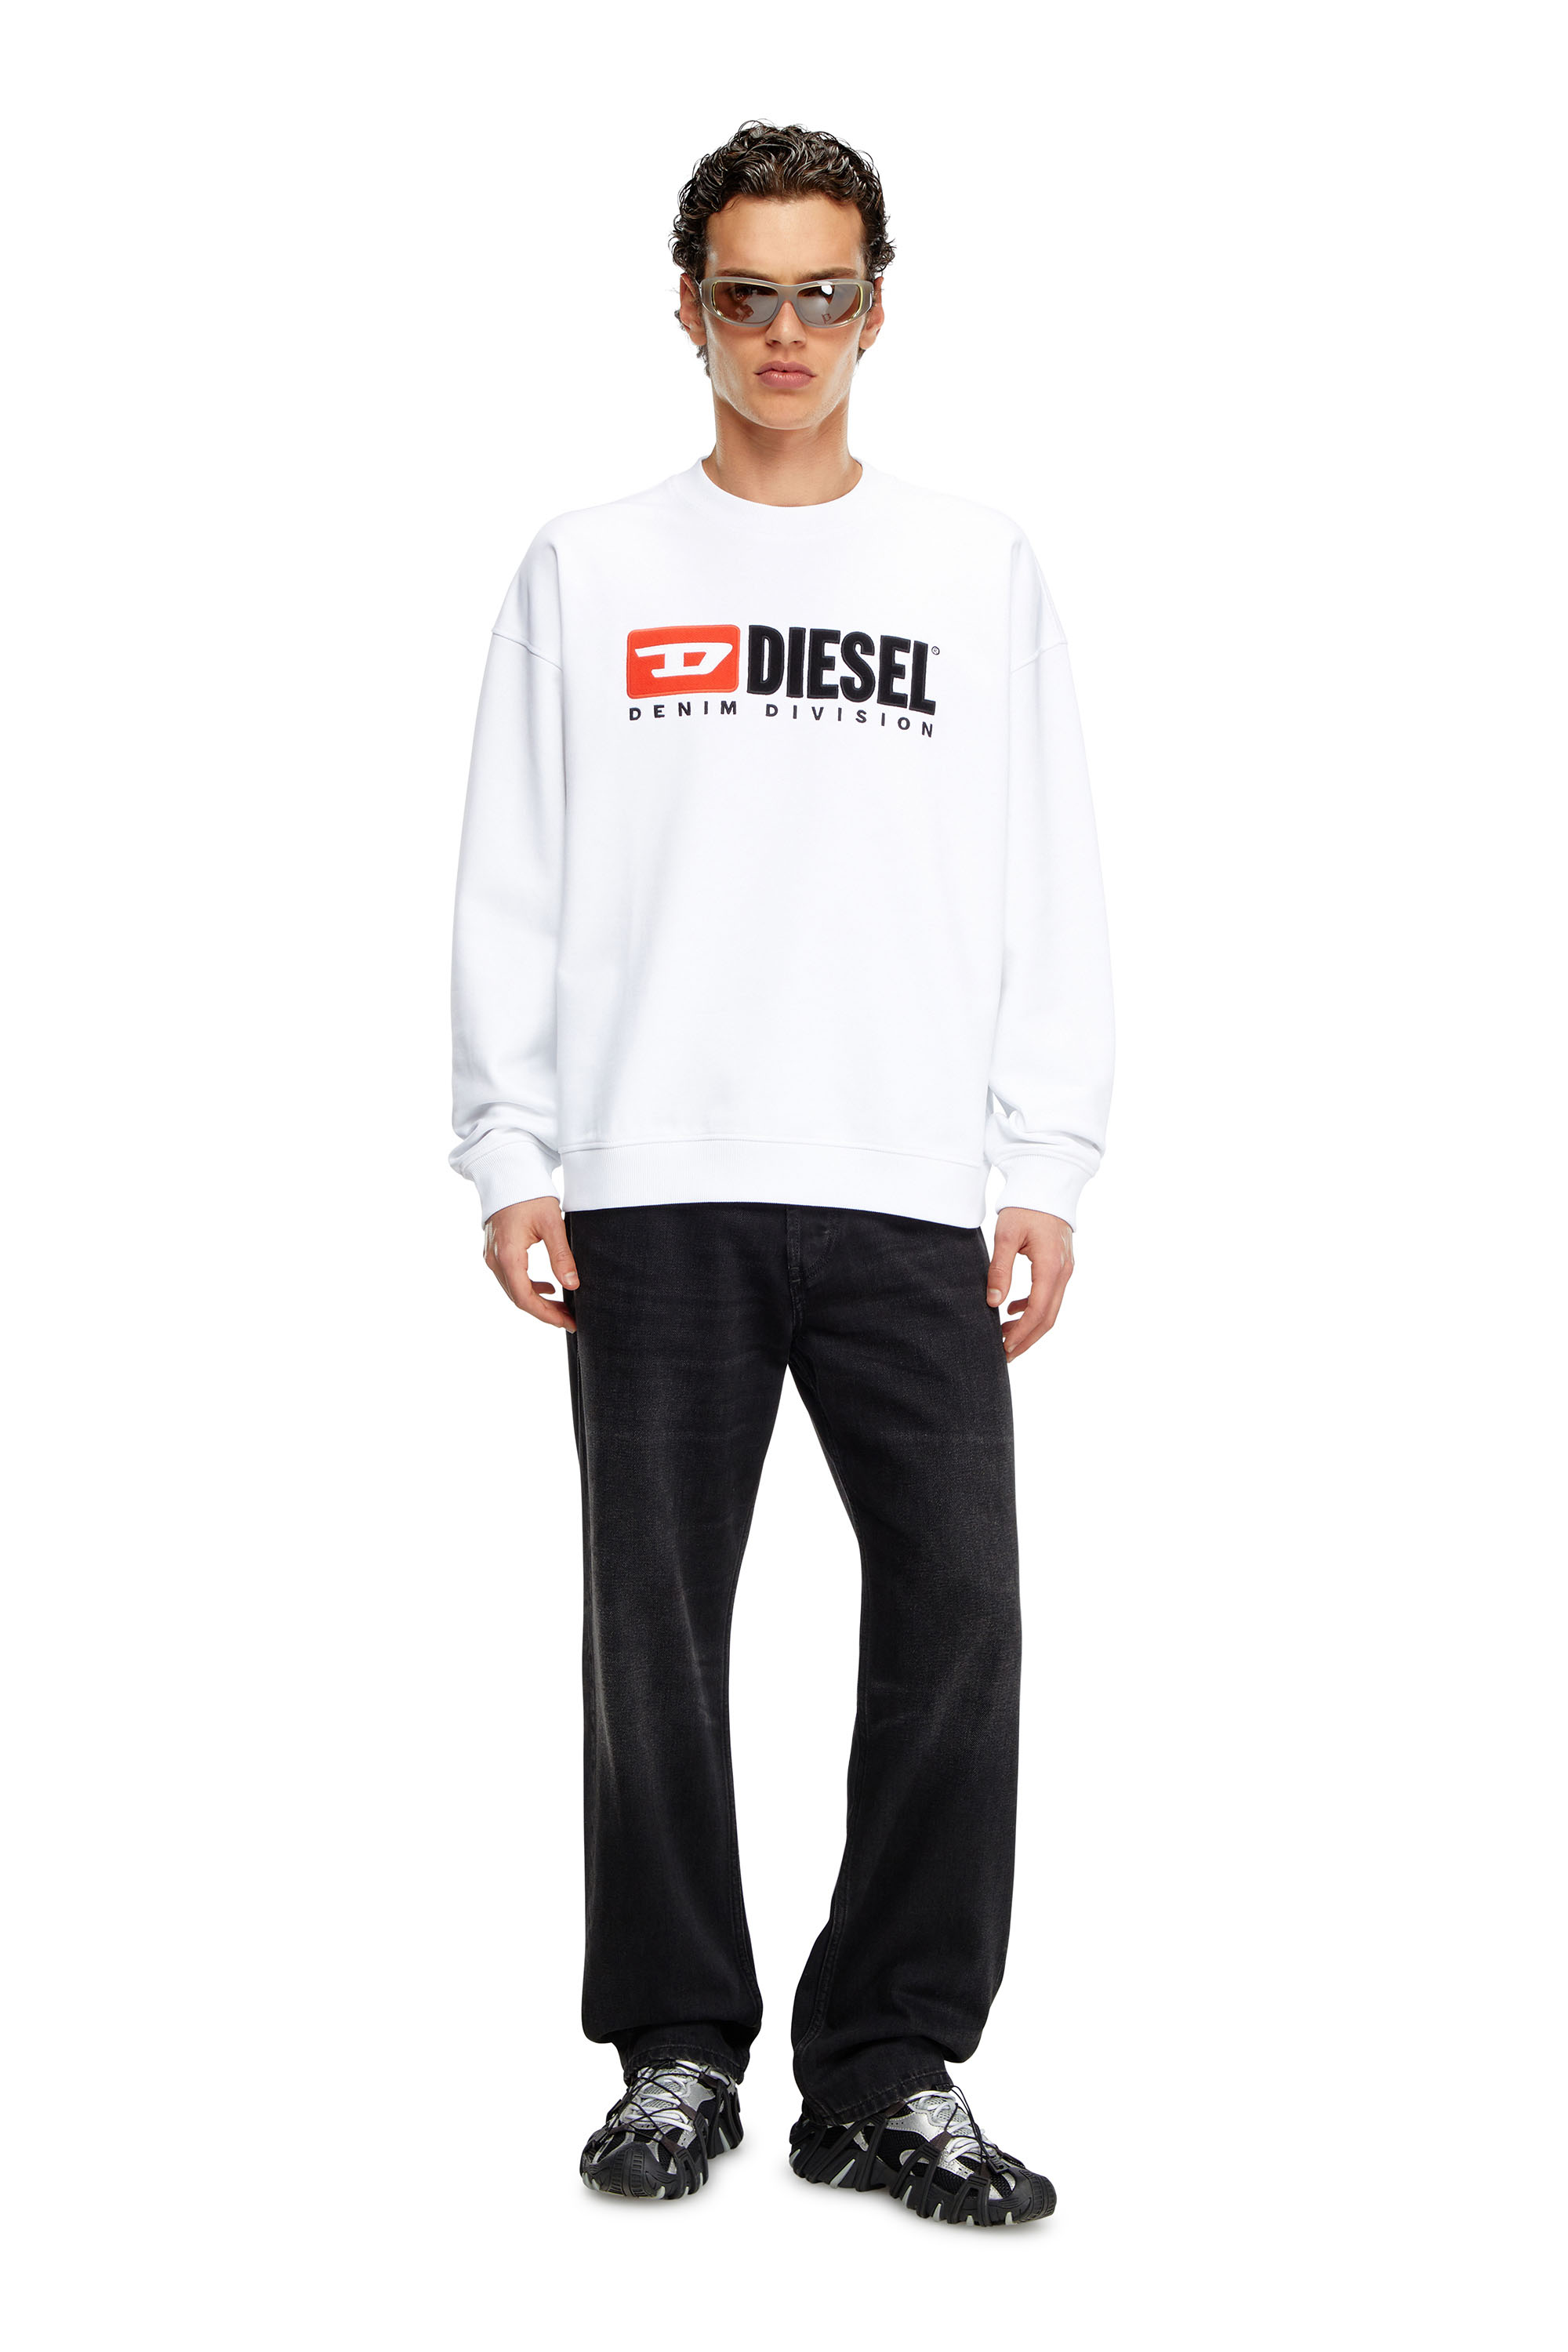 Diesel - S-BOXT-DIV, Man Sweatshirt with Denim Division logo in White - Image 2